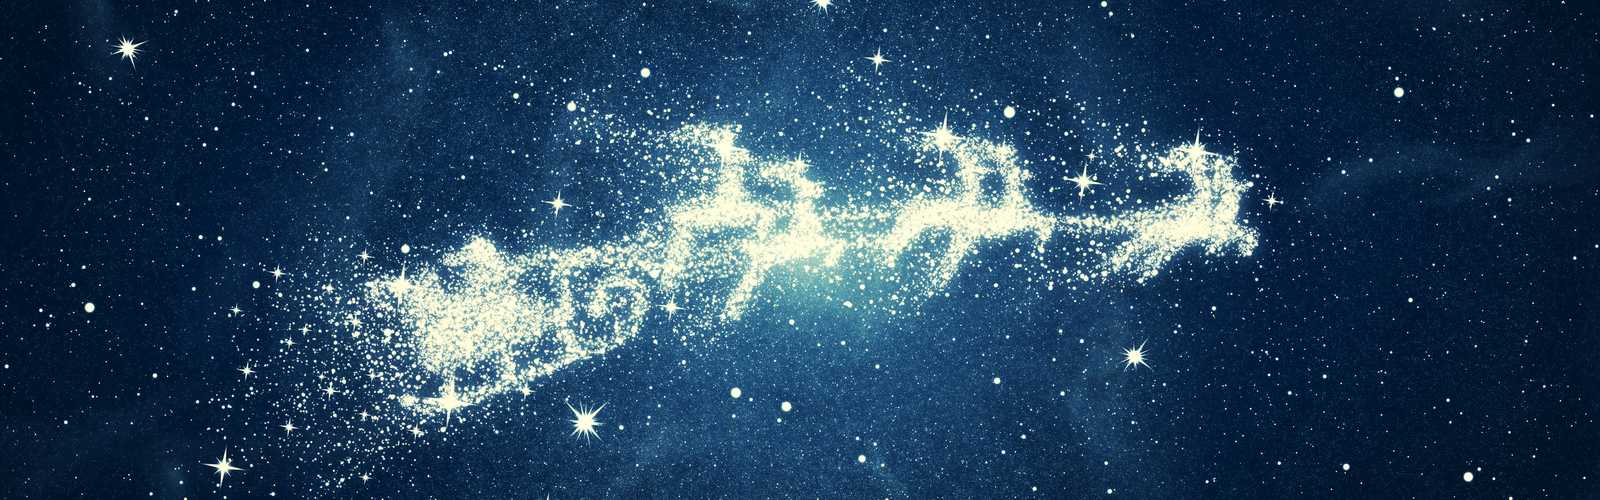 Star forming Santa's sleigh and reindeer